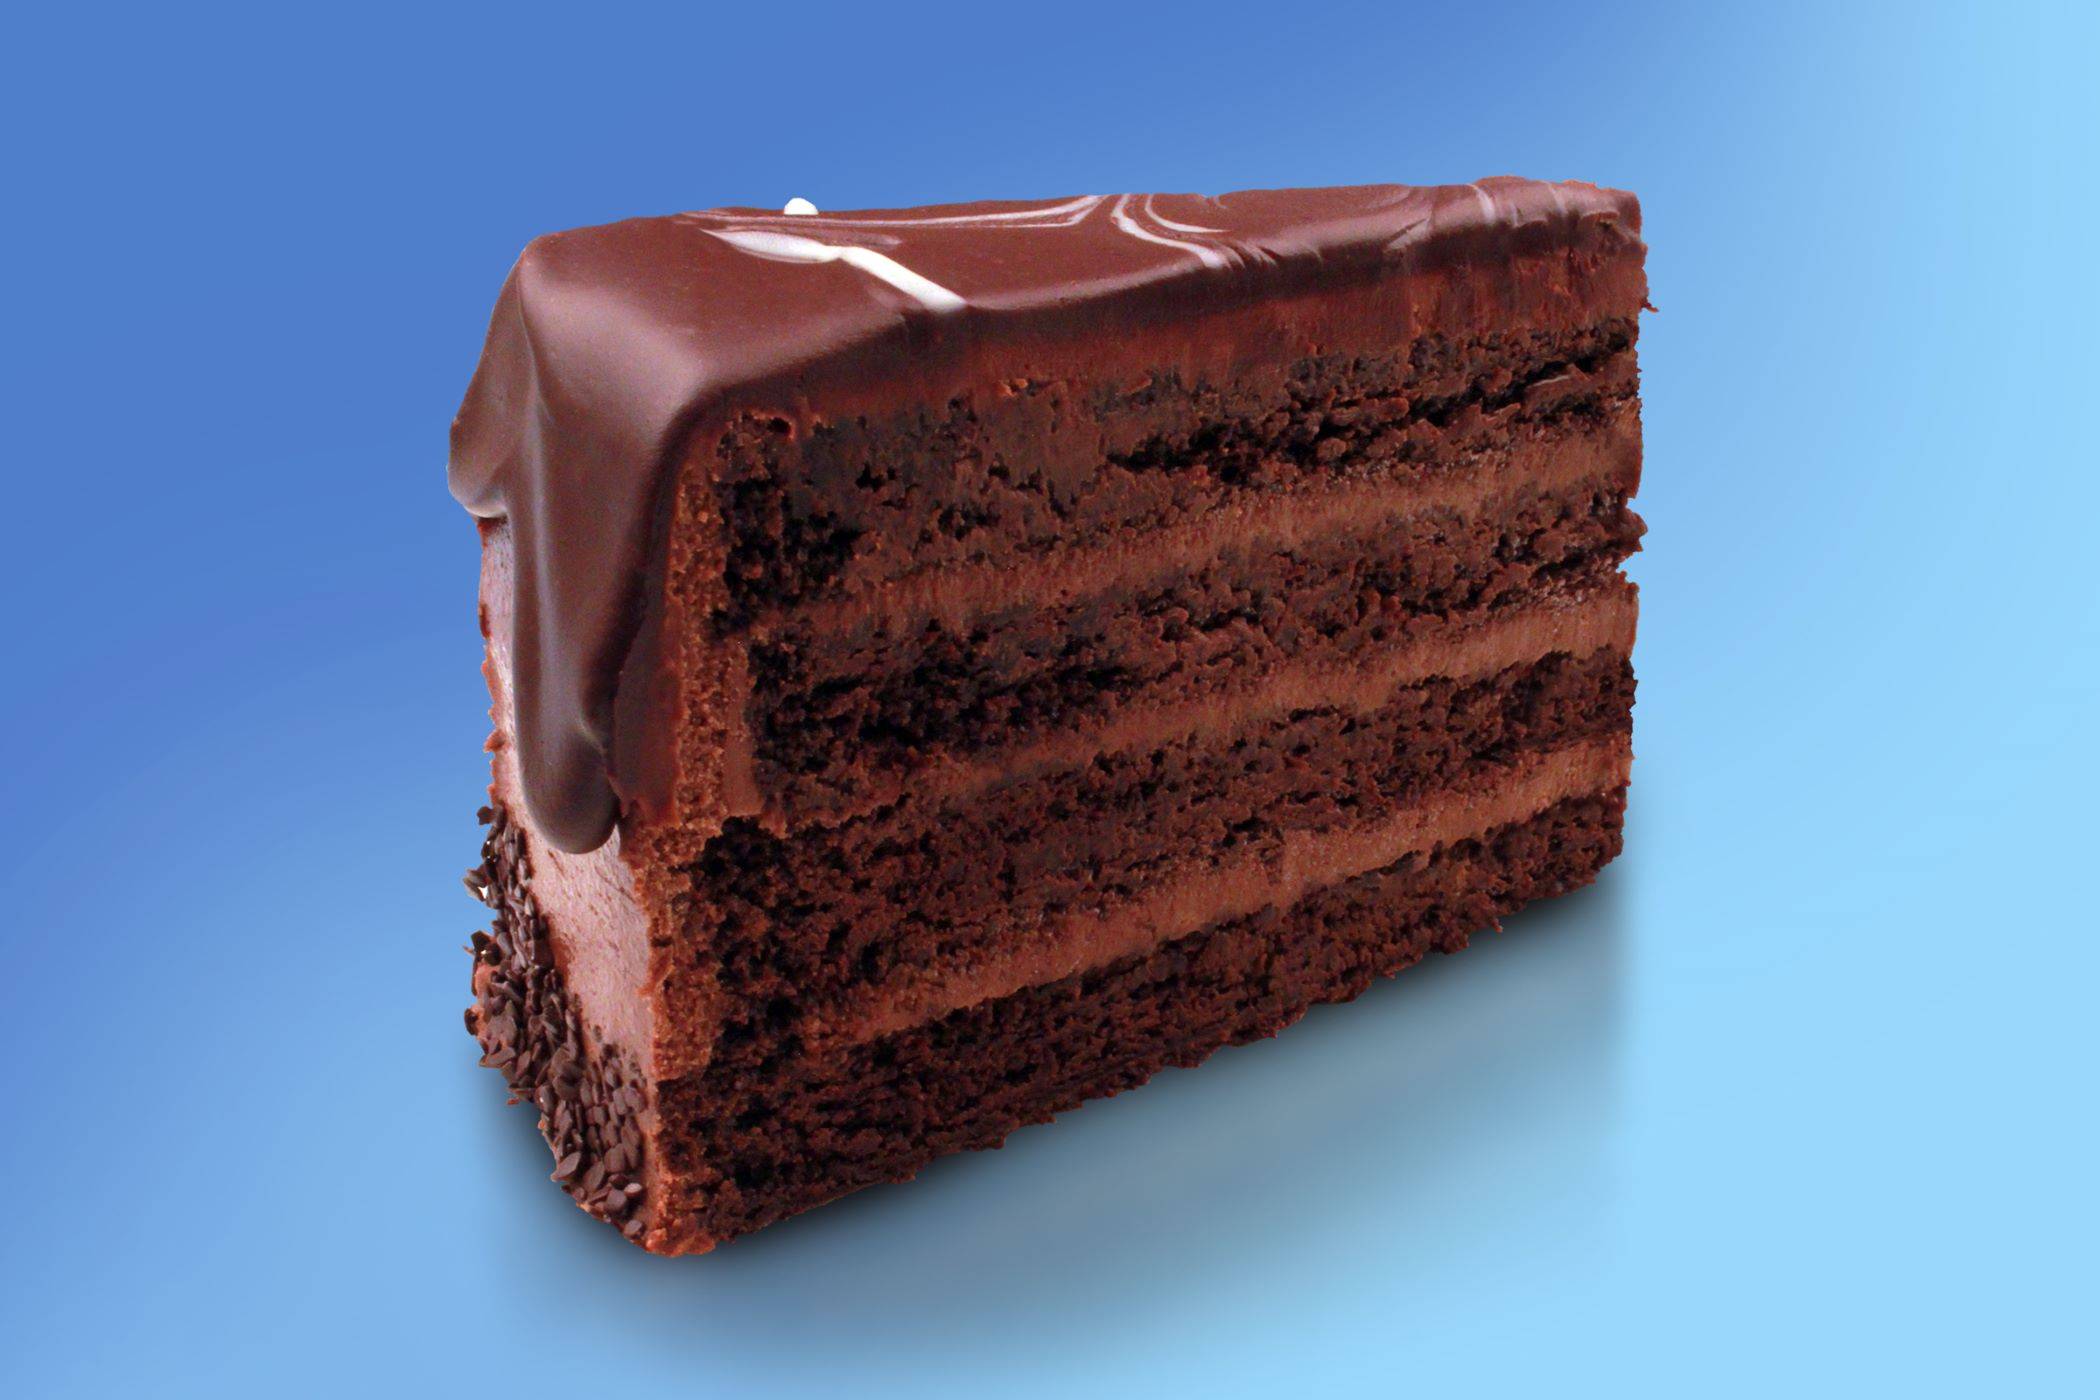 So Good Chocolate cake